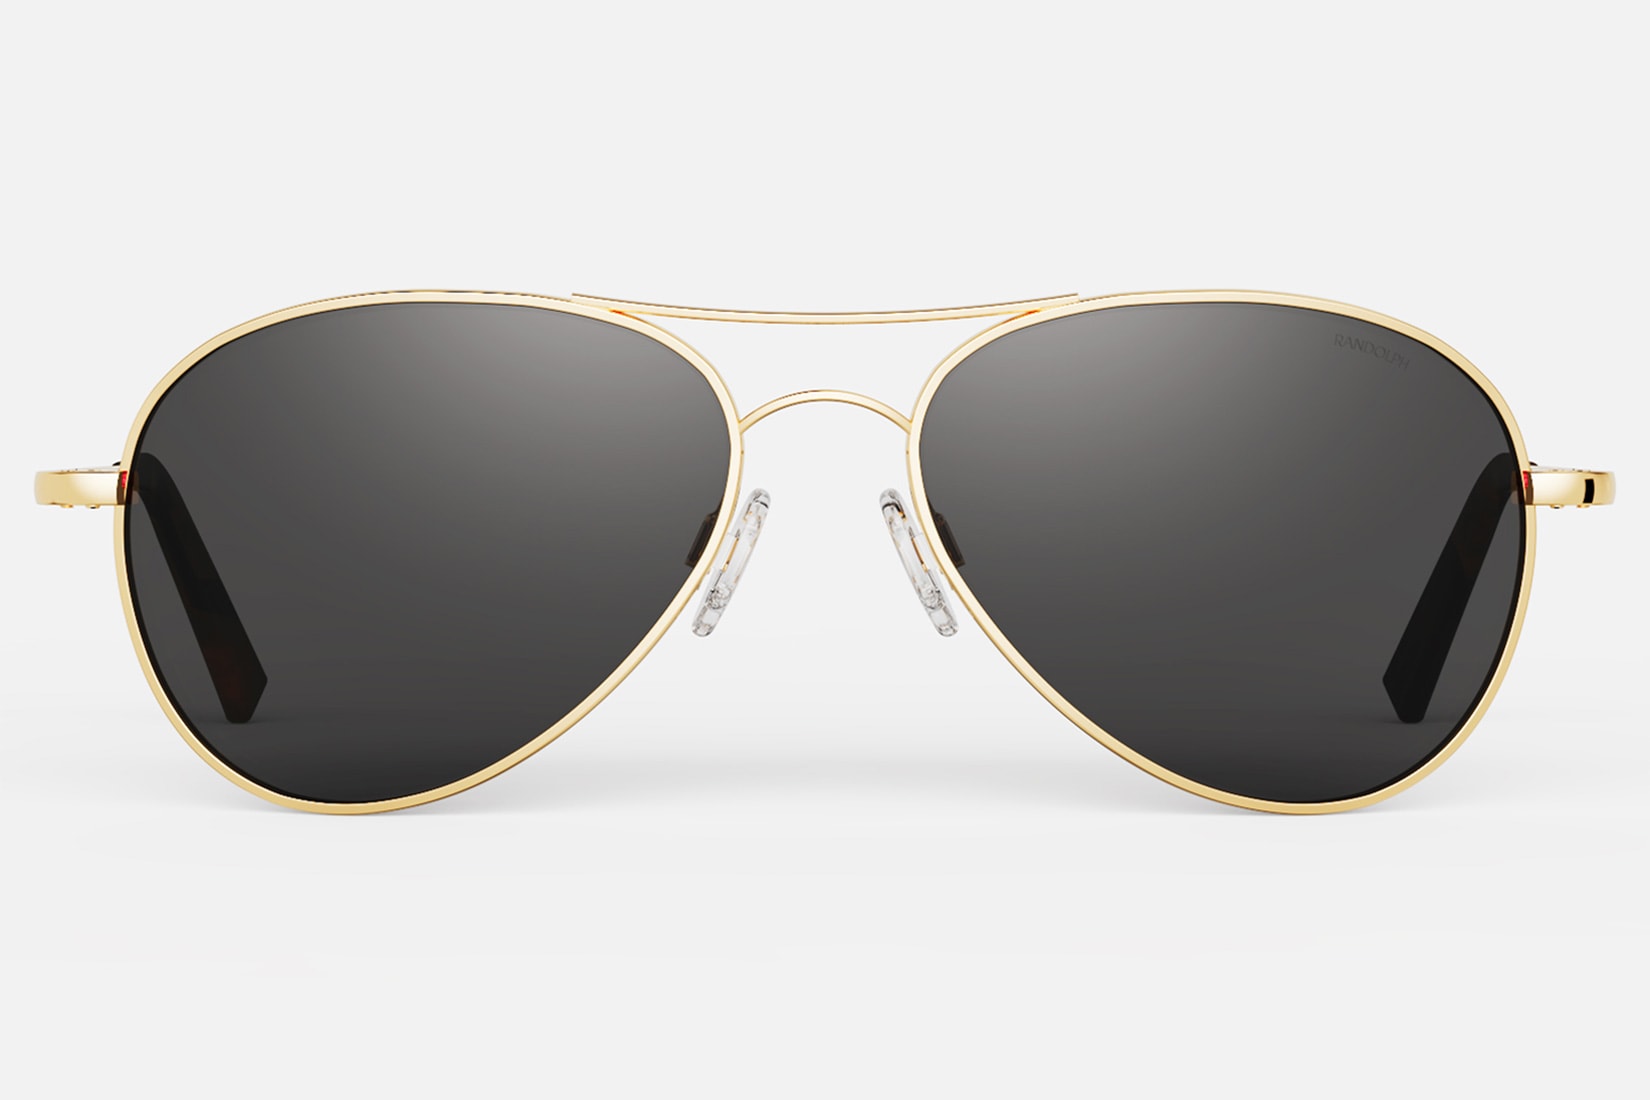 Randolph USA amelia women sunglasses review - Luxe Digital